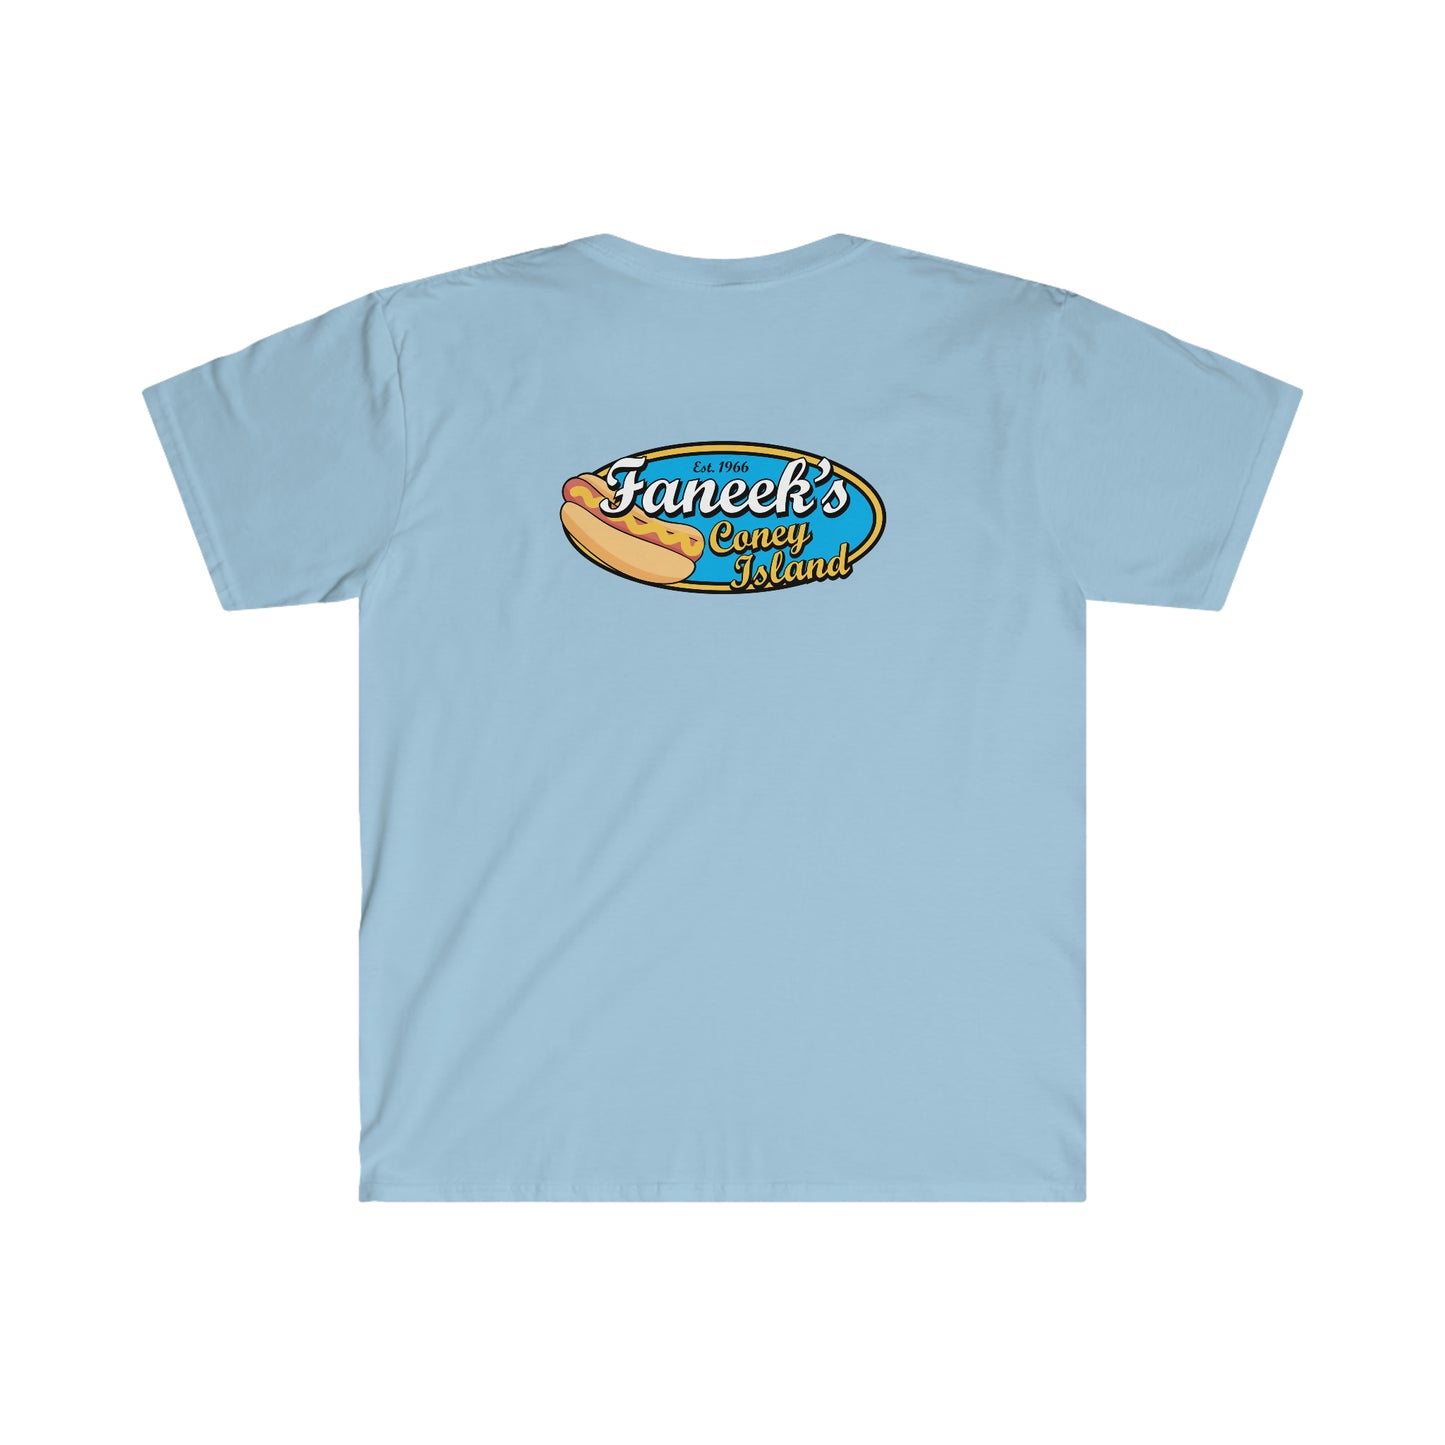 Cheap Thrills Unisex Softstyle T-Shirt